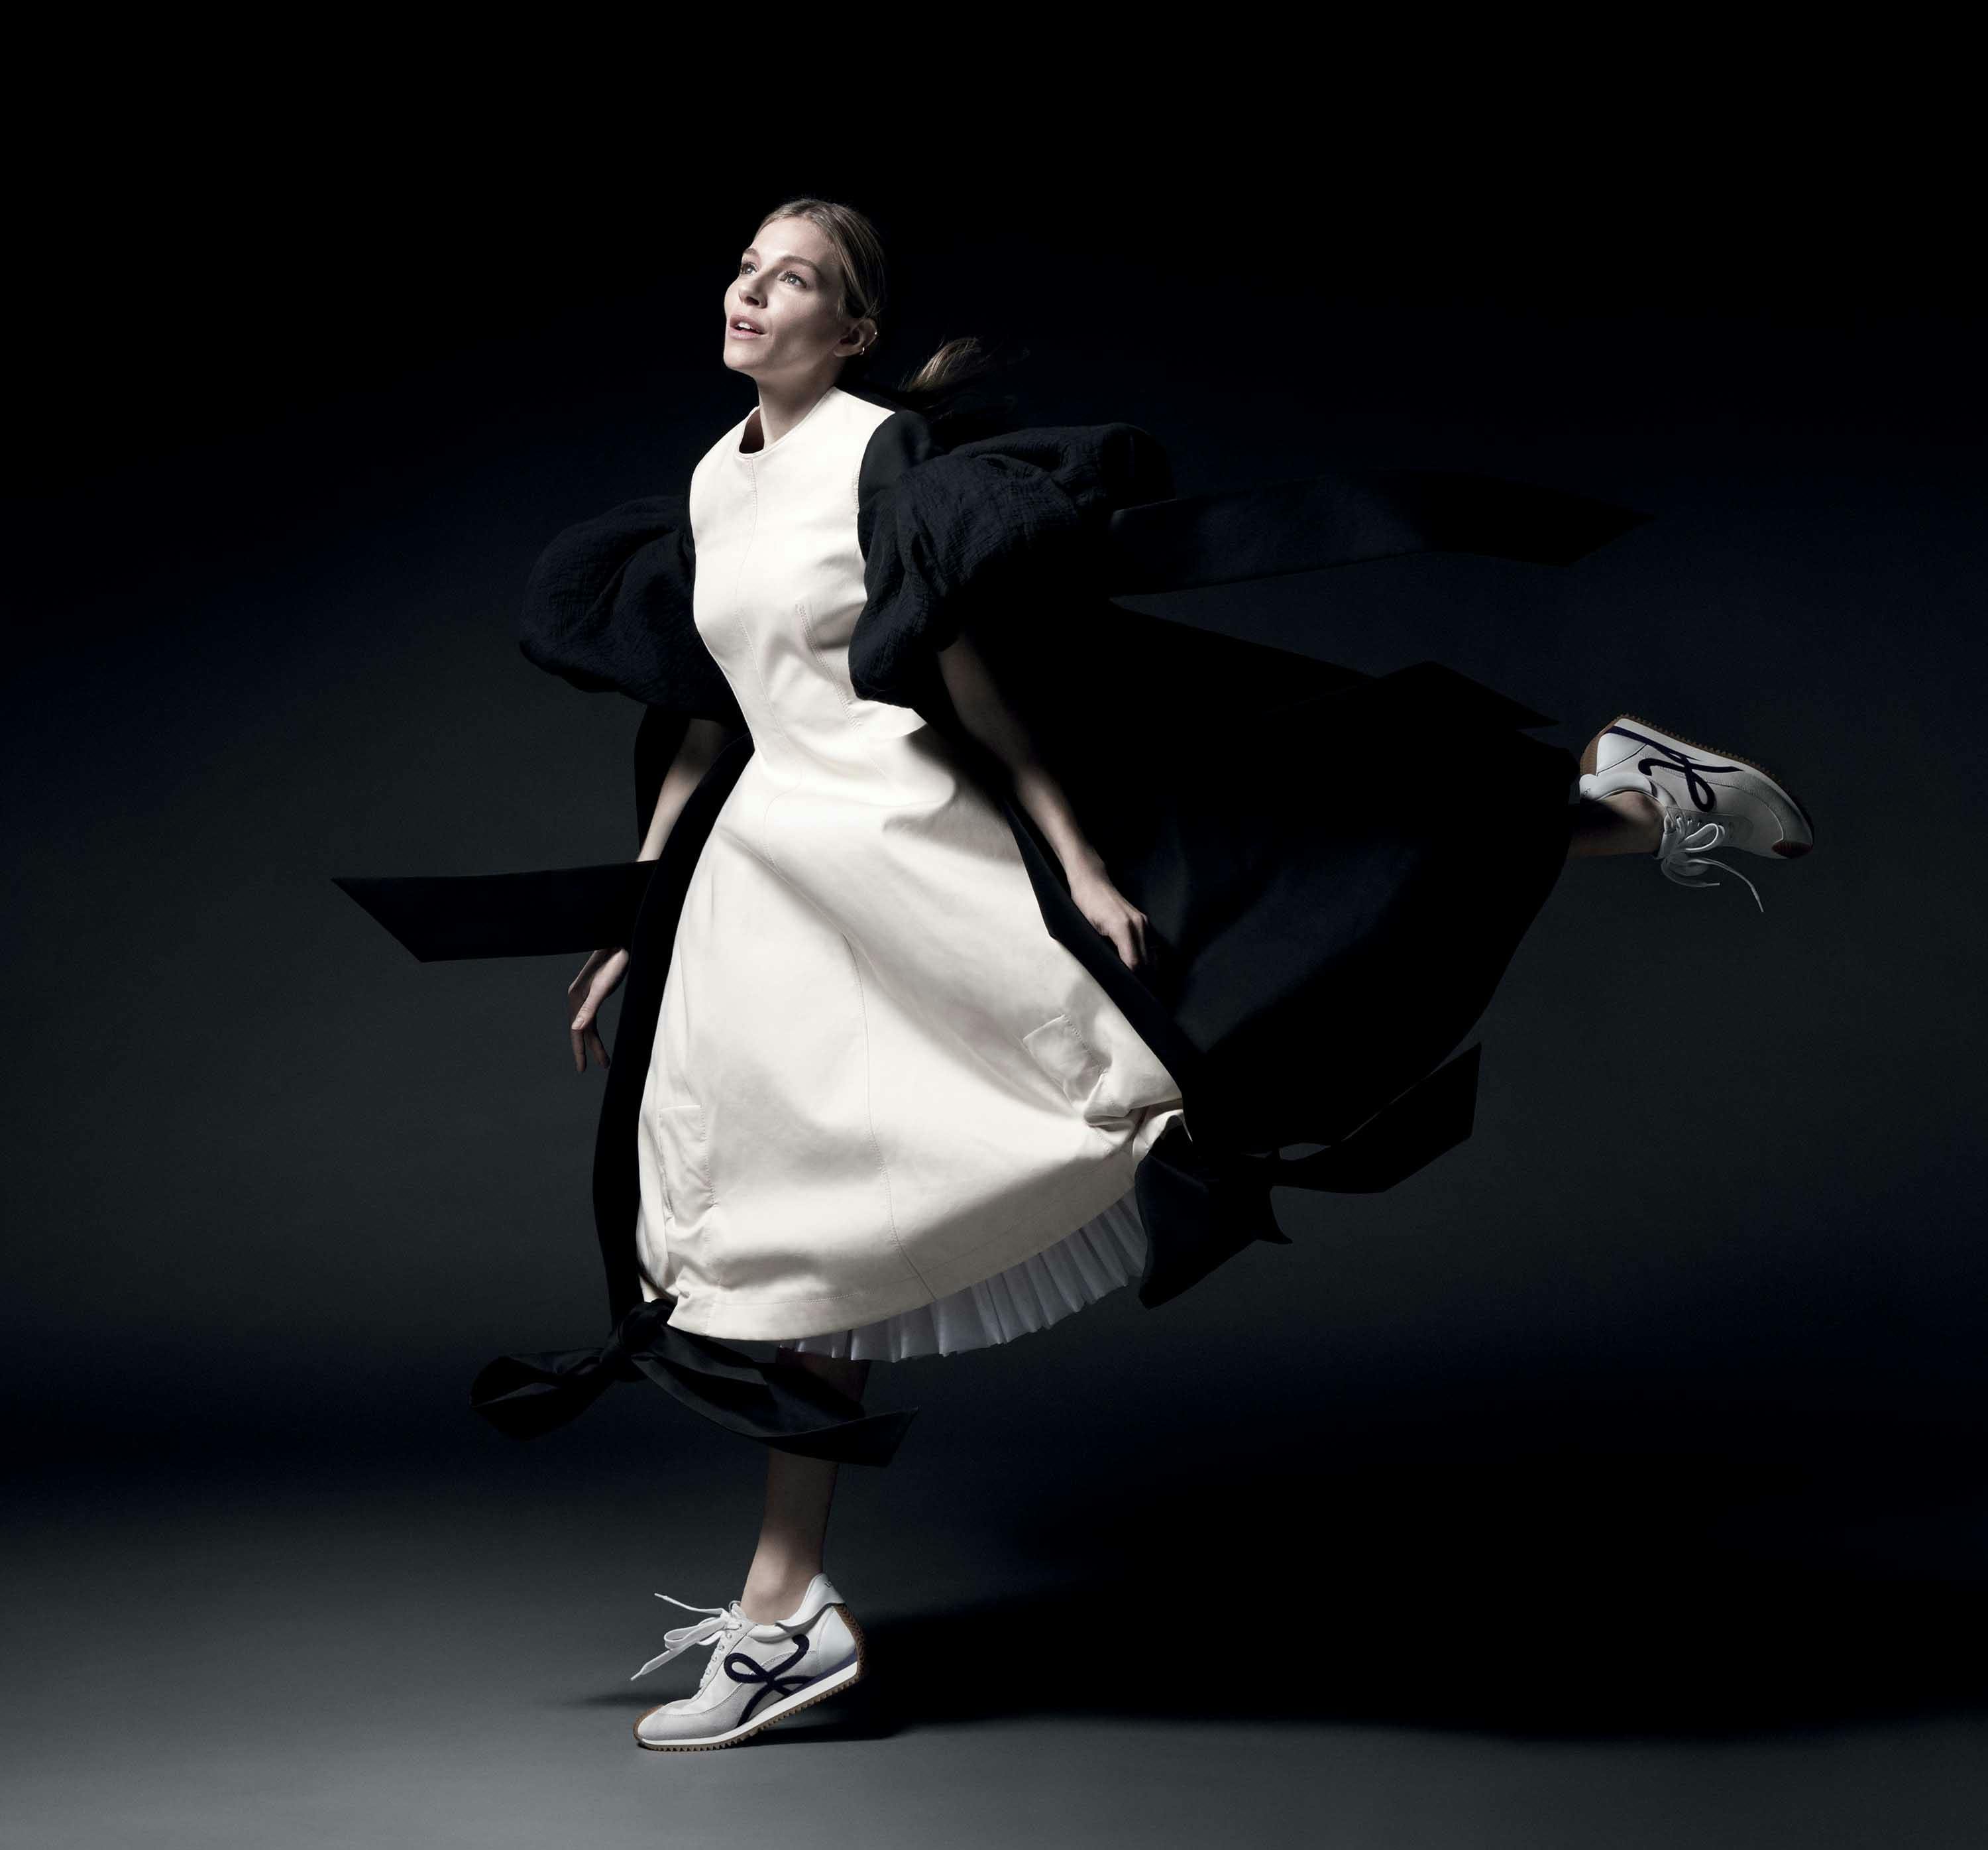 shoe adult female person woman high heel dancing coat fashion sneaker